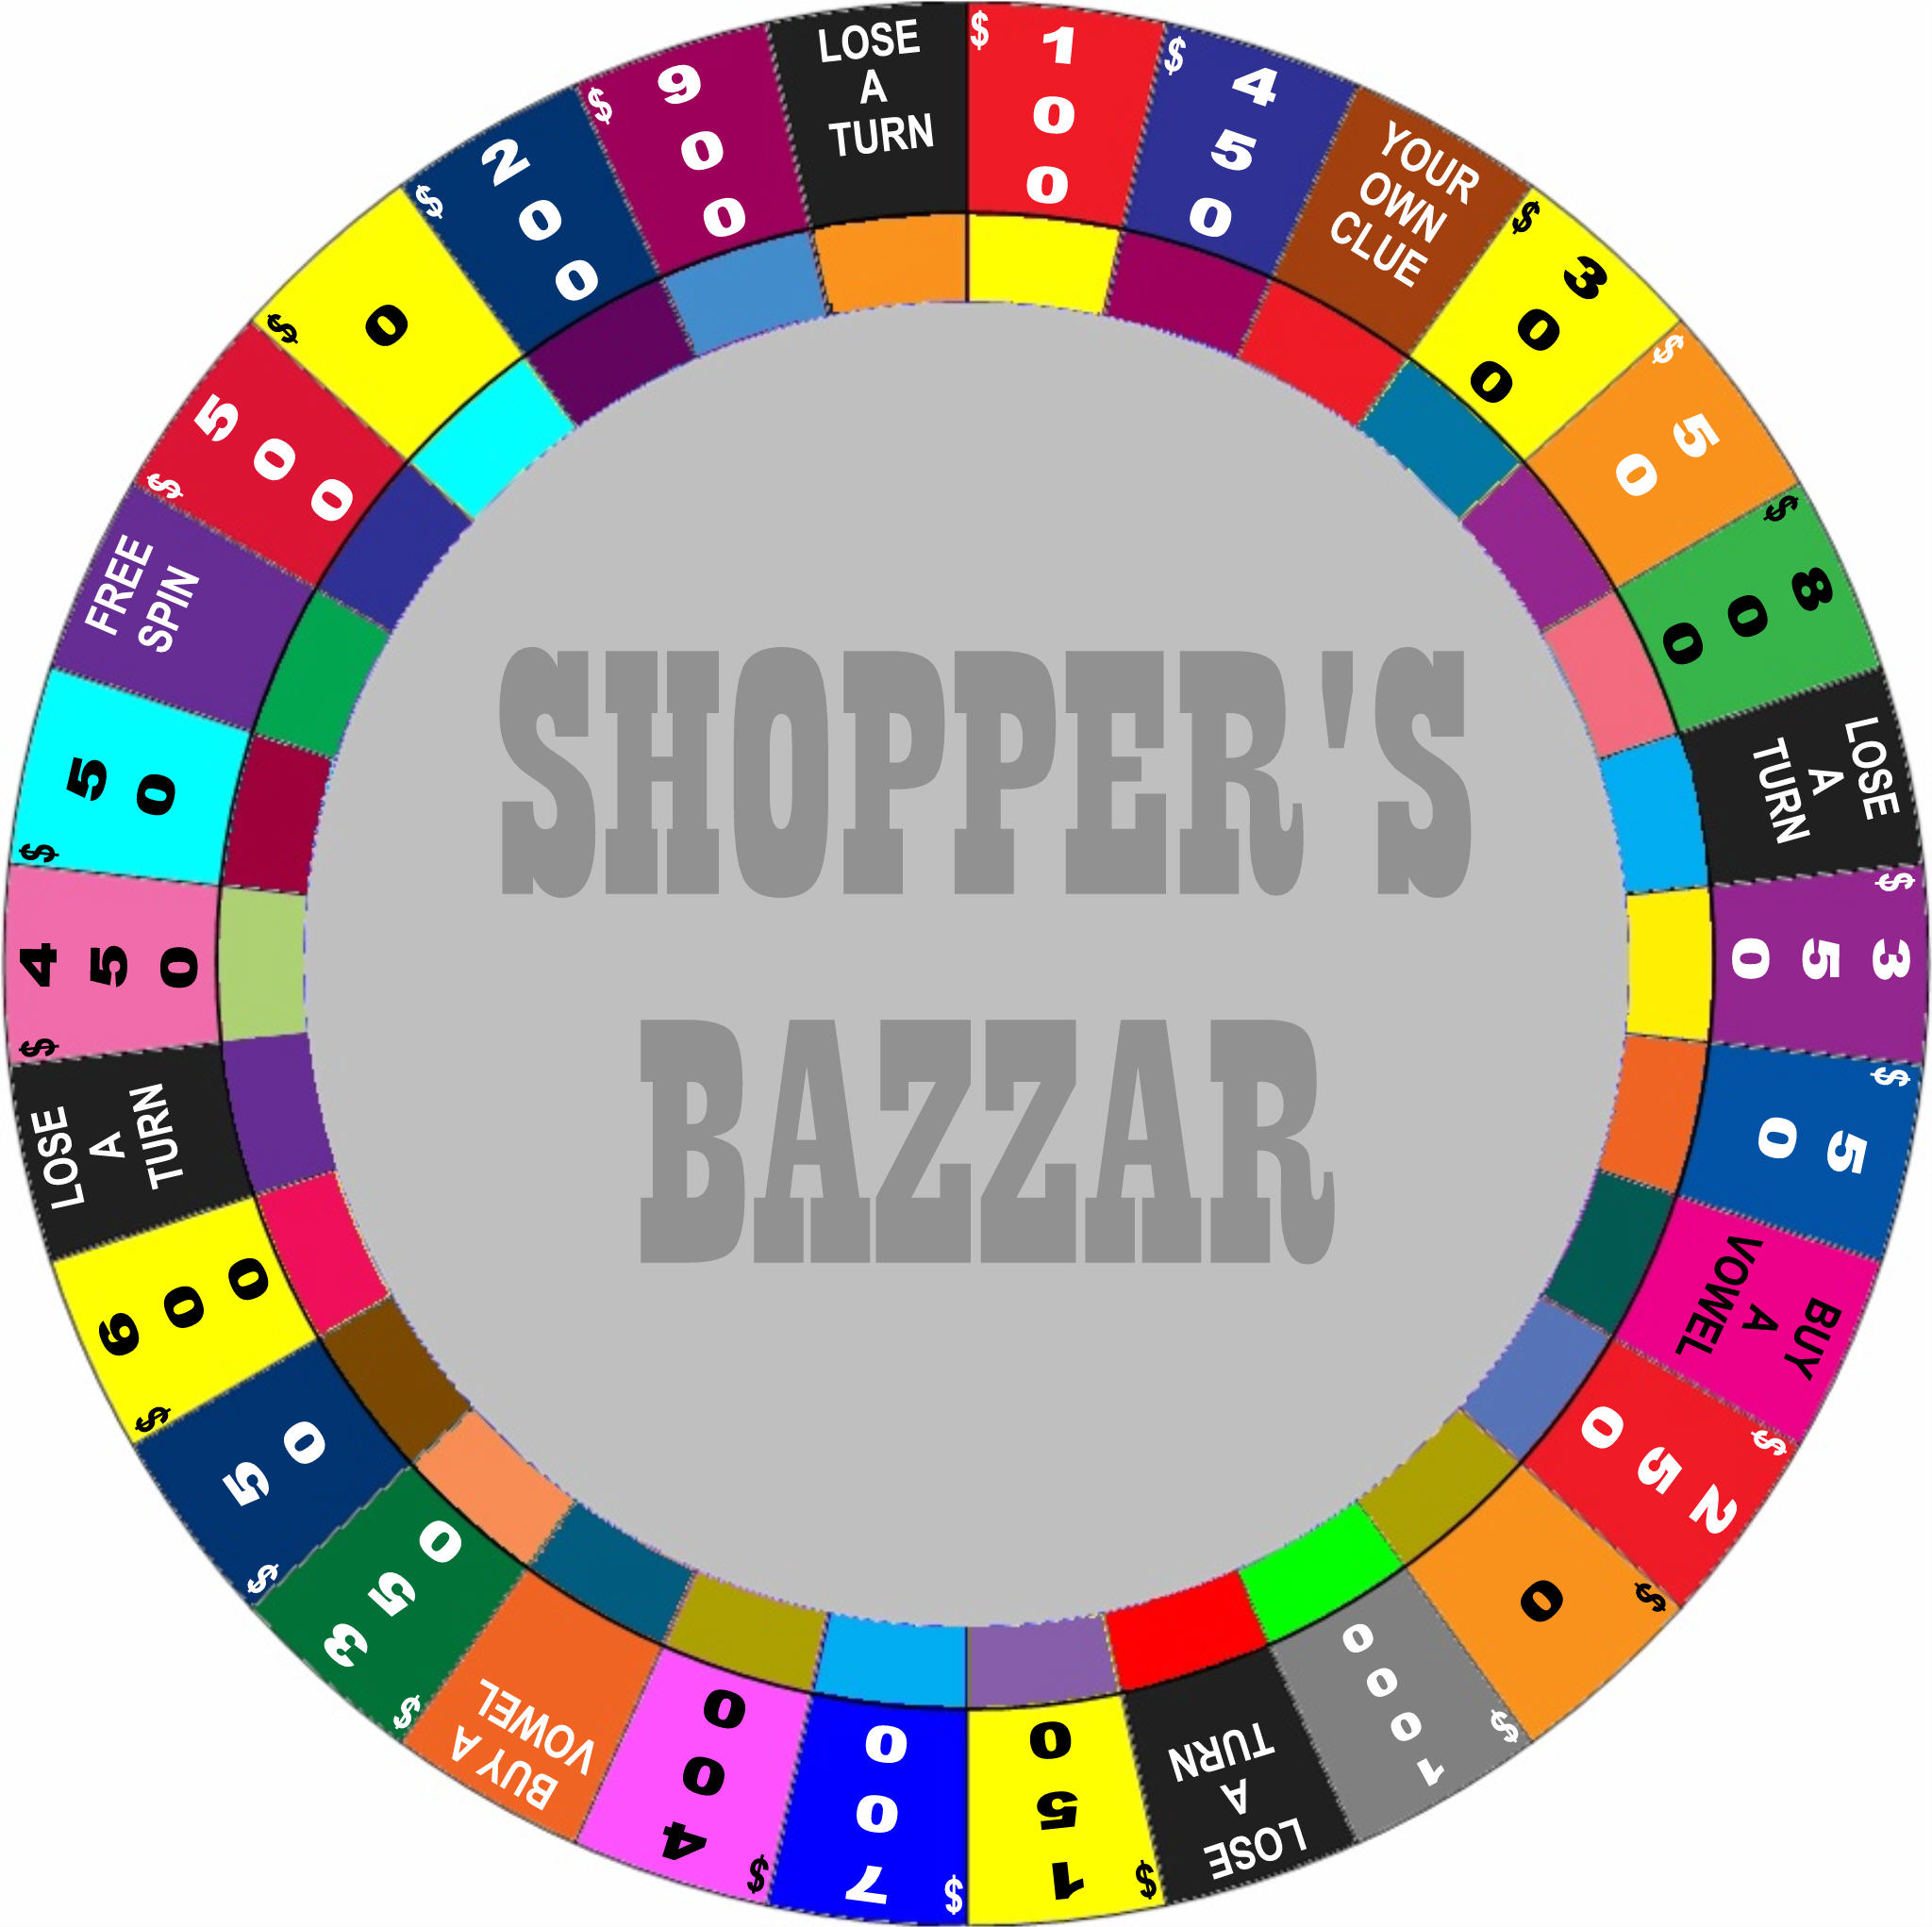 Shopper's Bazaar by germanname